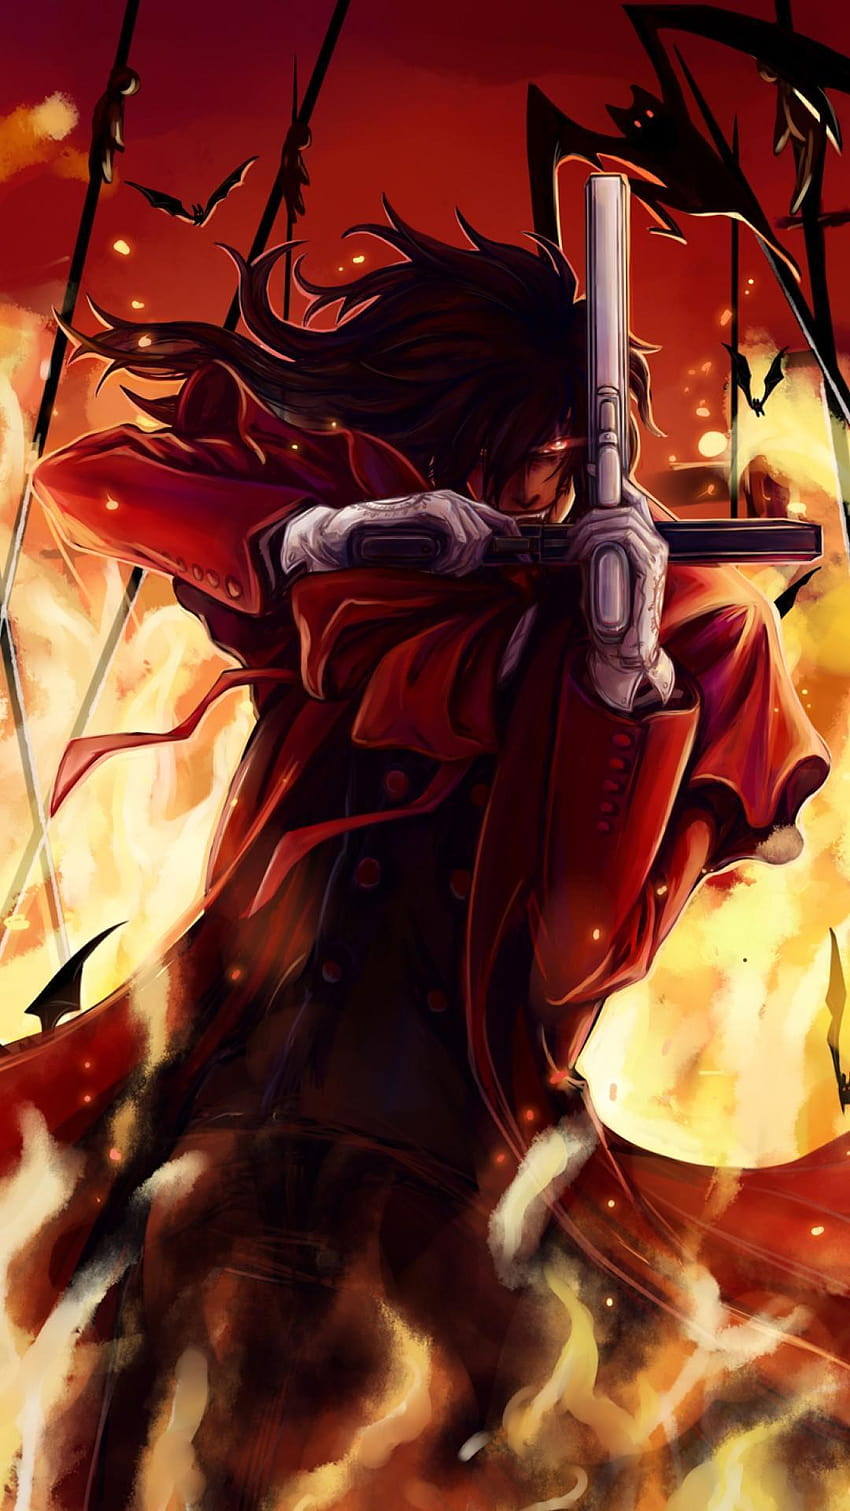 Amazon.com: Hellsing Alucard Awesome Dark Anime Manga Art 32x24 Print  Poster: Posters & Prints